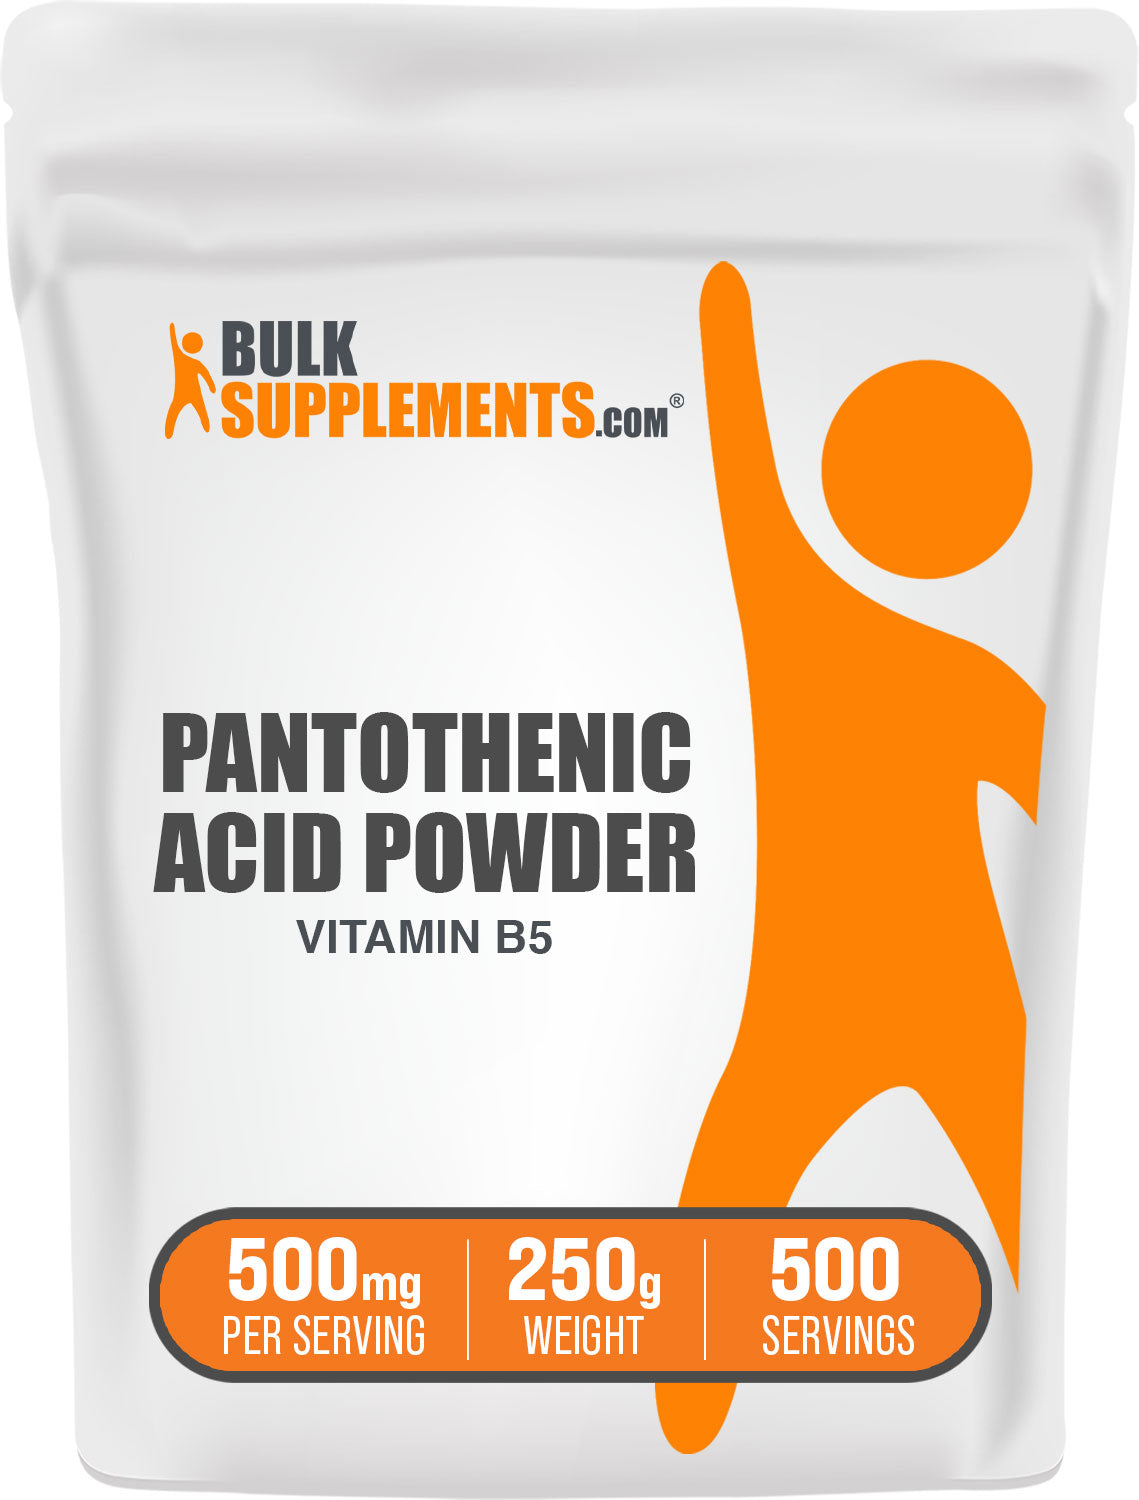 BulkSupplements.com Pantothenic Acid Powder Vitamin B5 250g bag